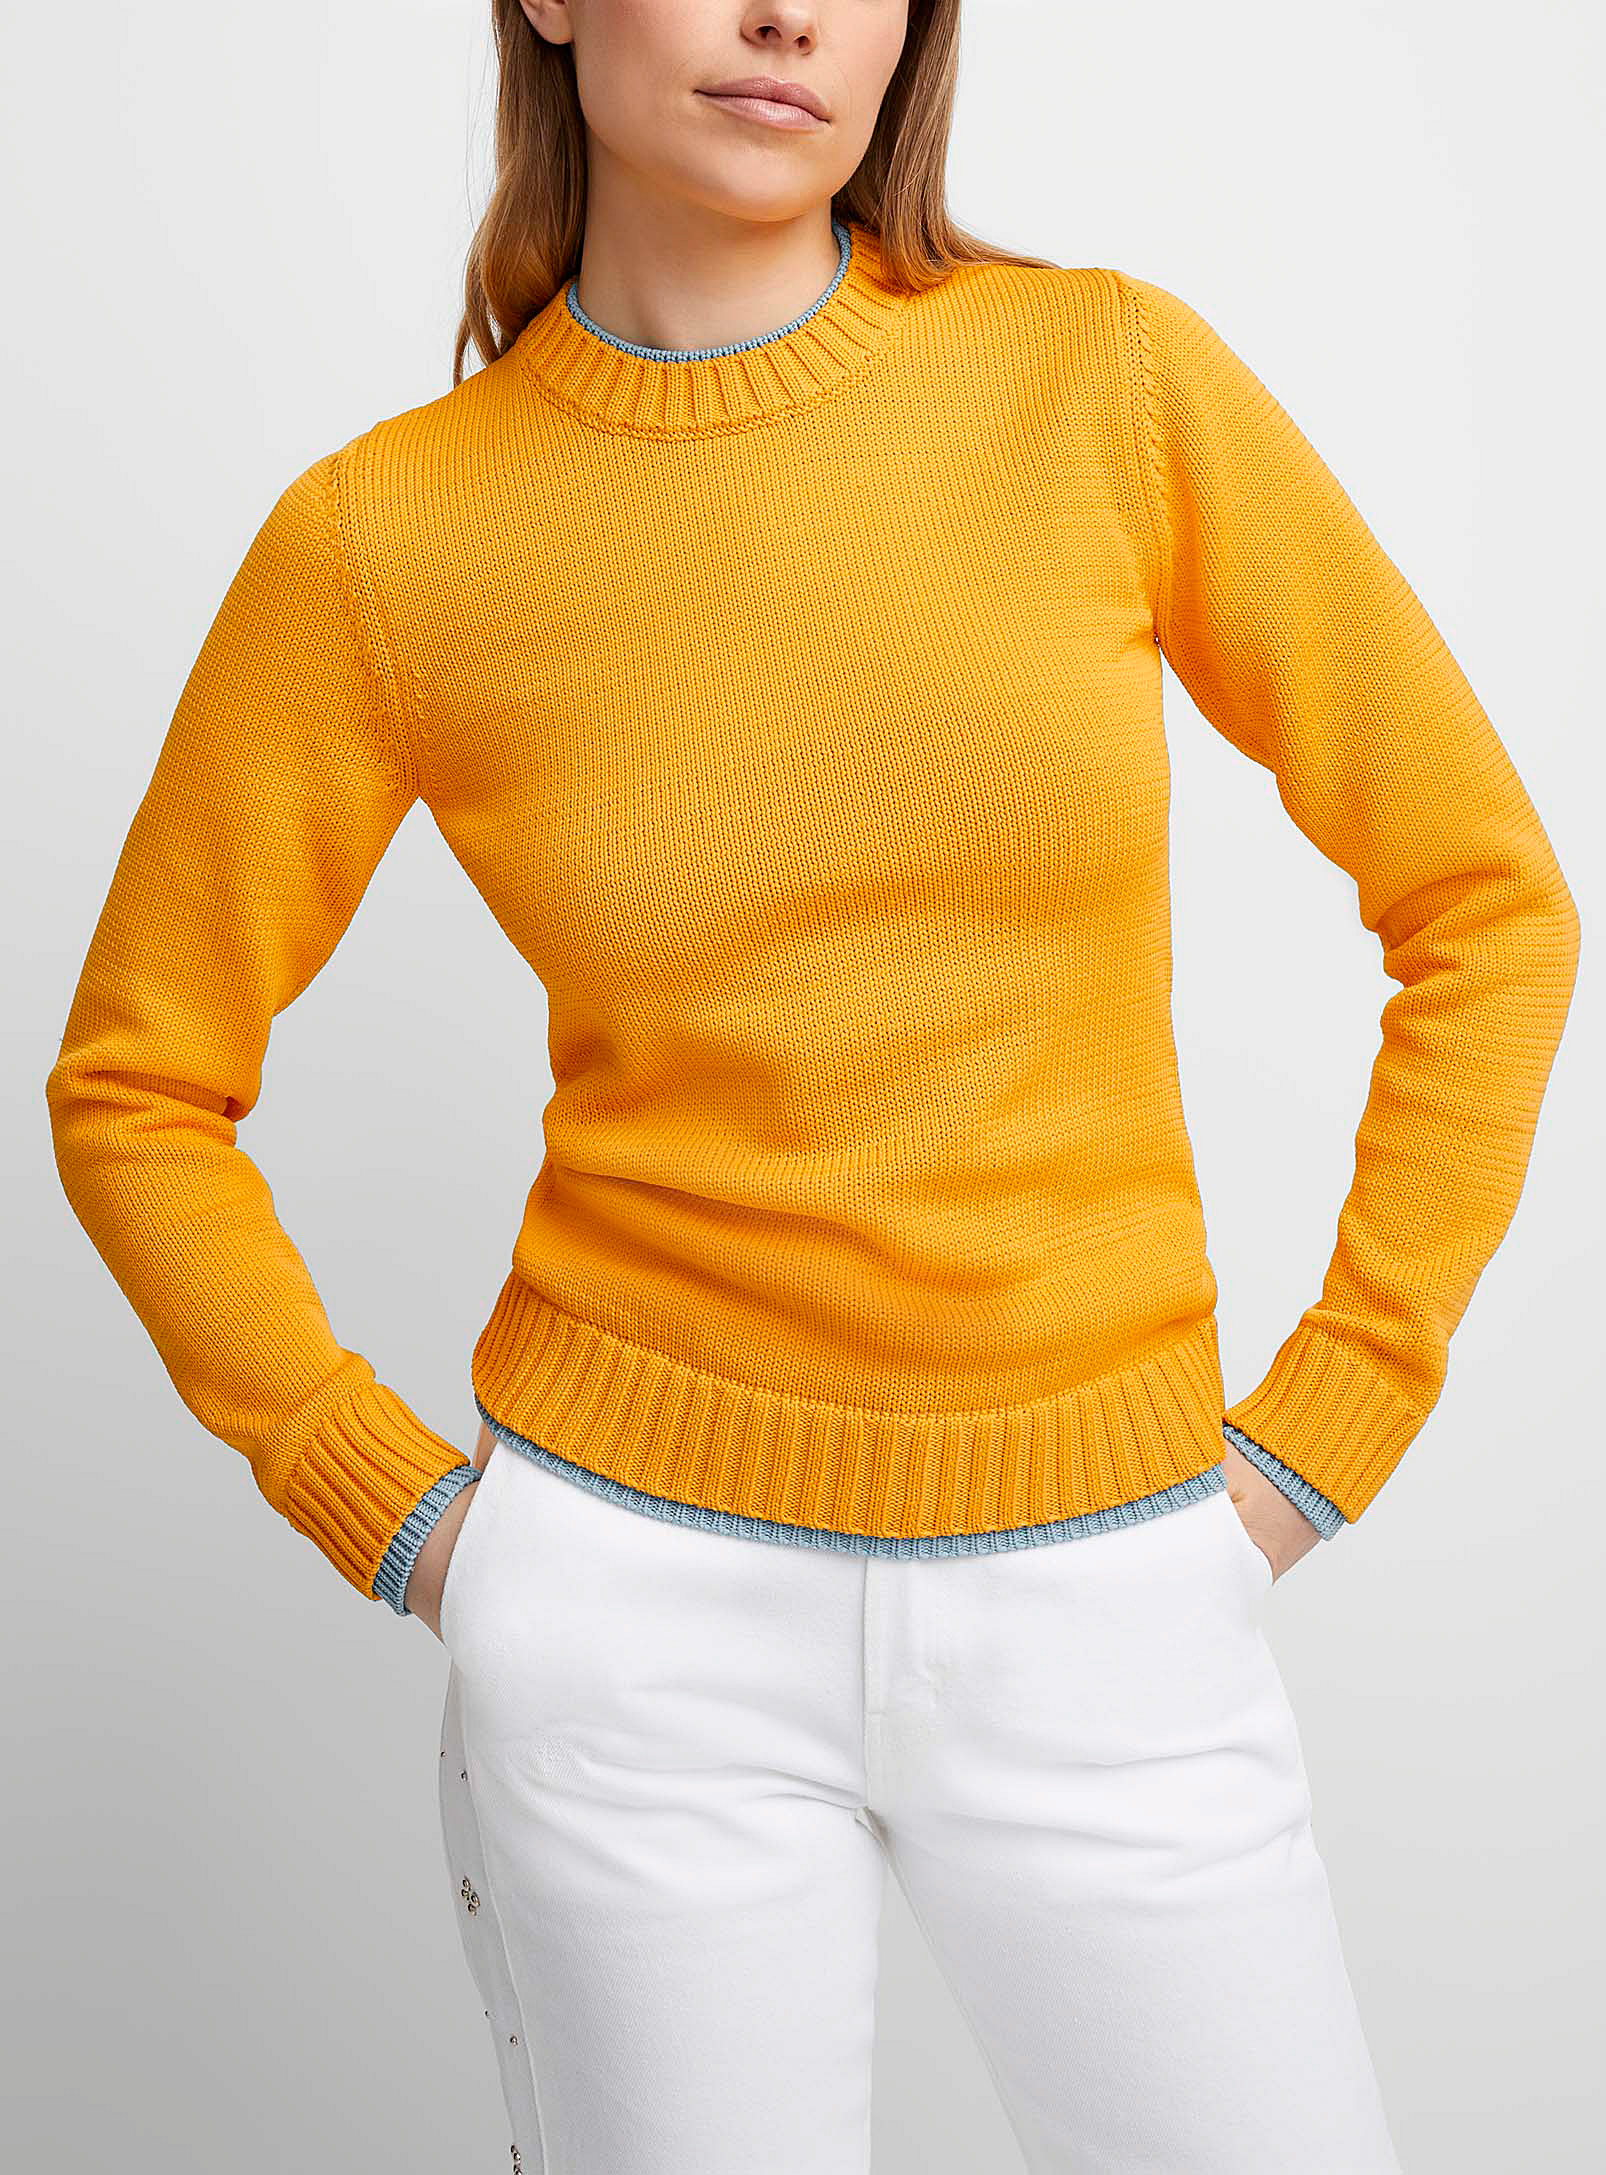 Wales Bonner - Women's Doubled effect yellow sweater